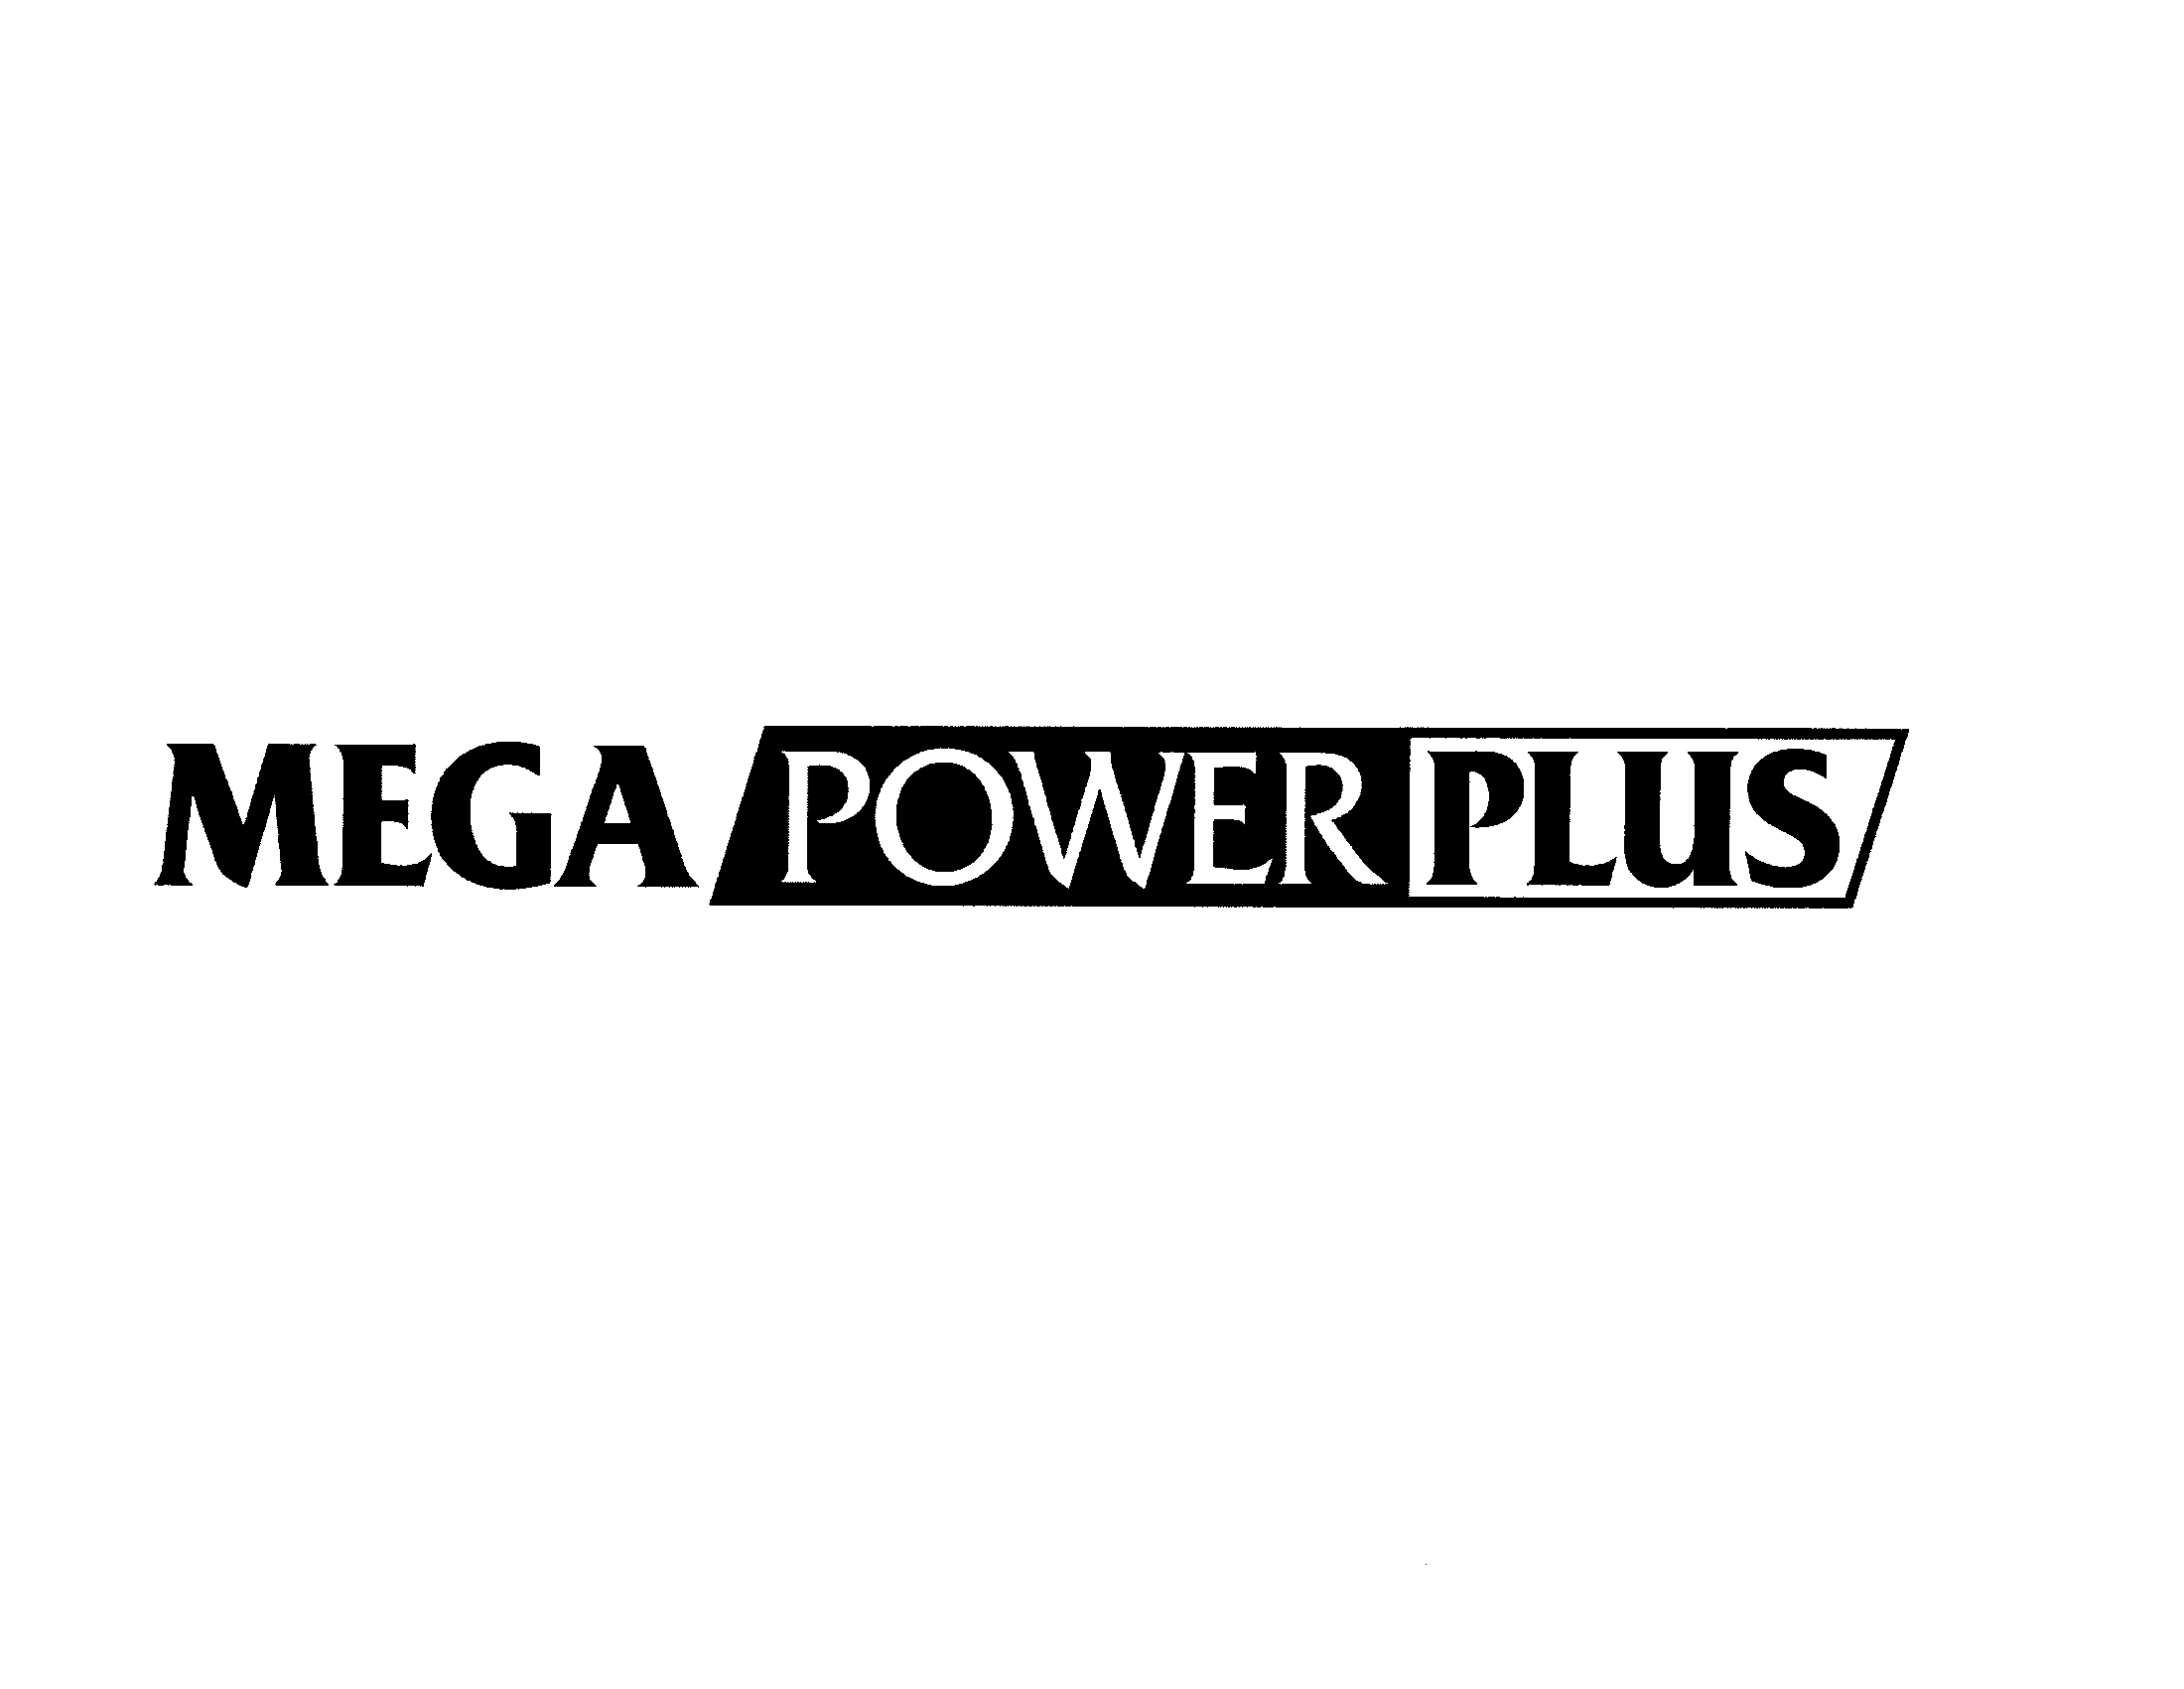  MEGA POWER PLUS